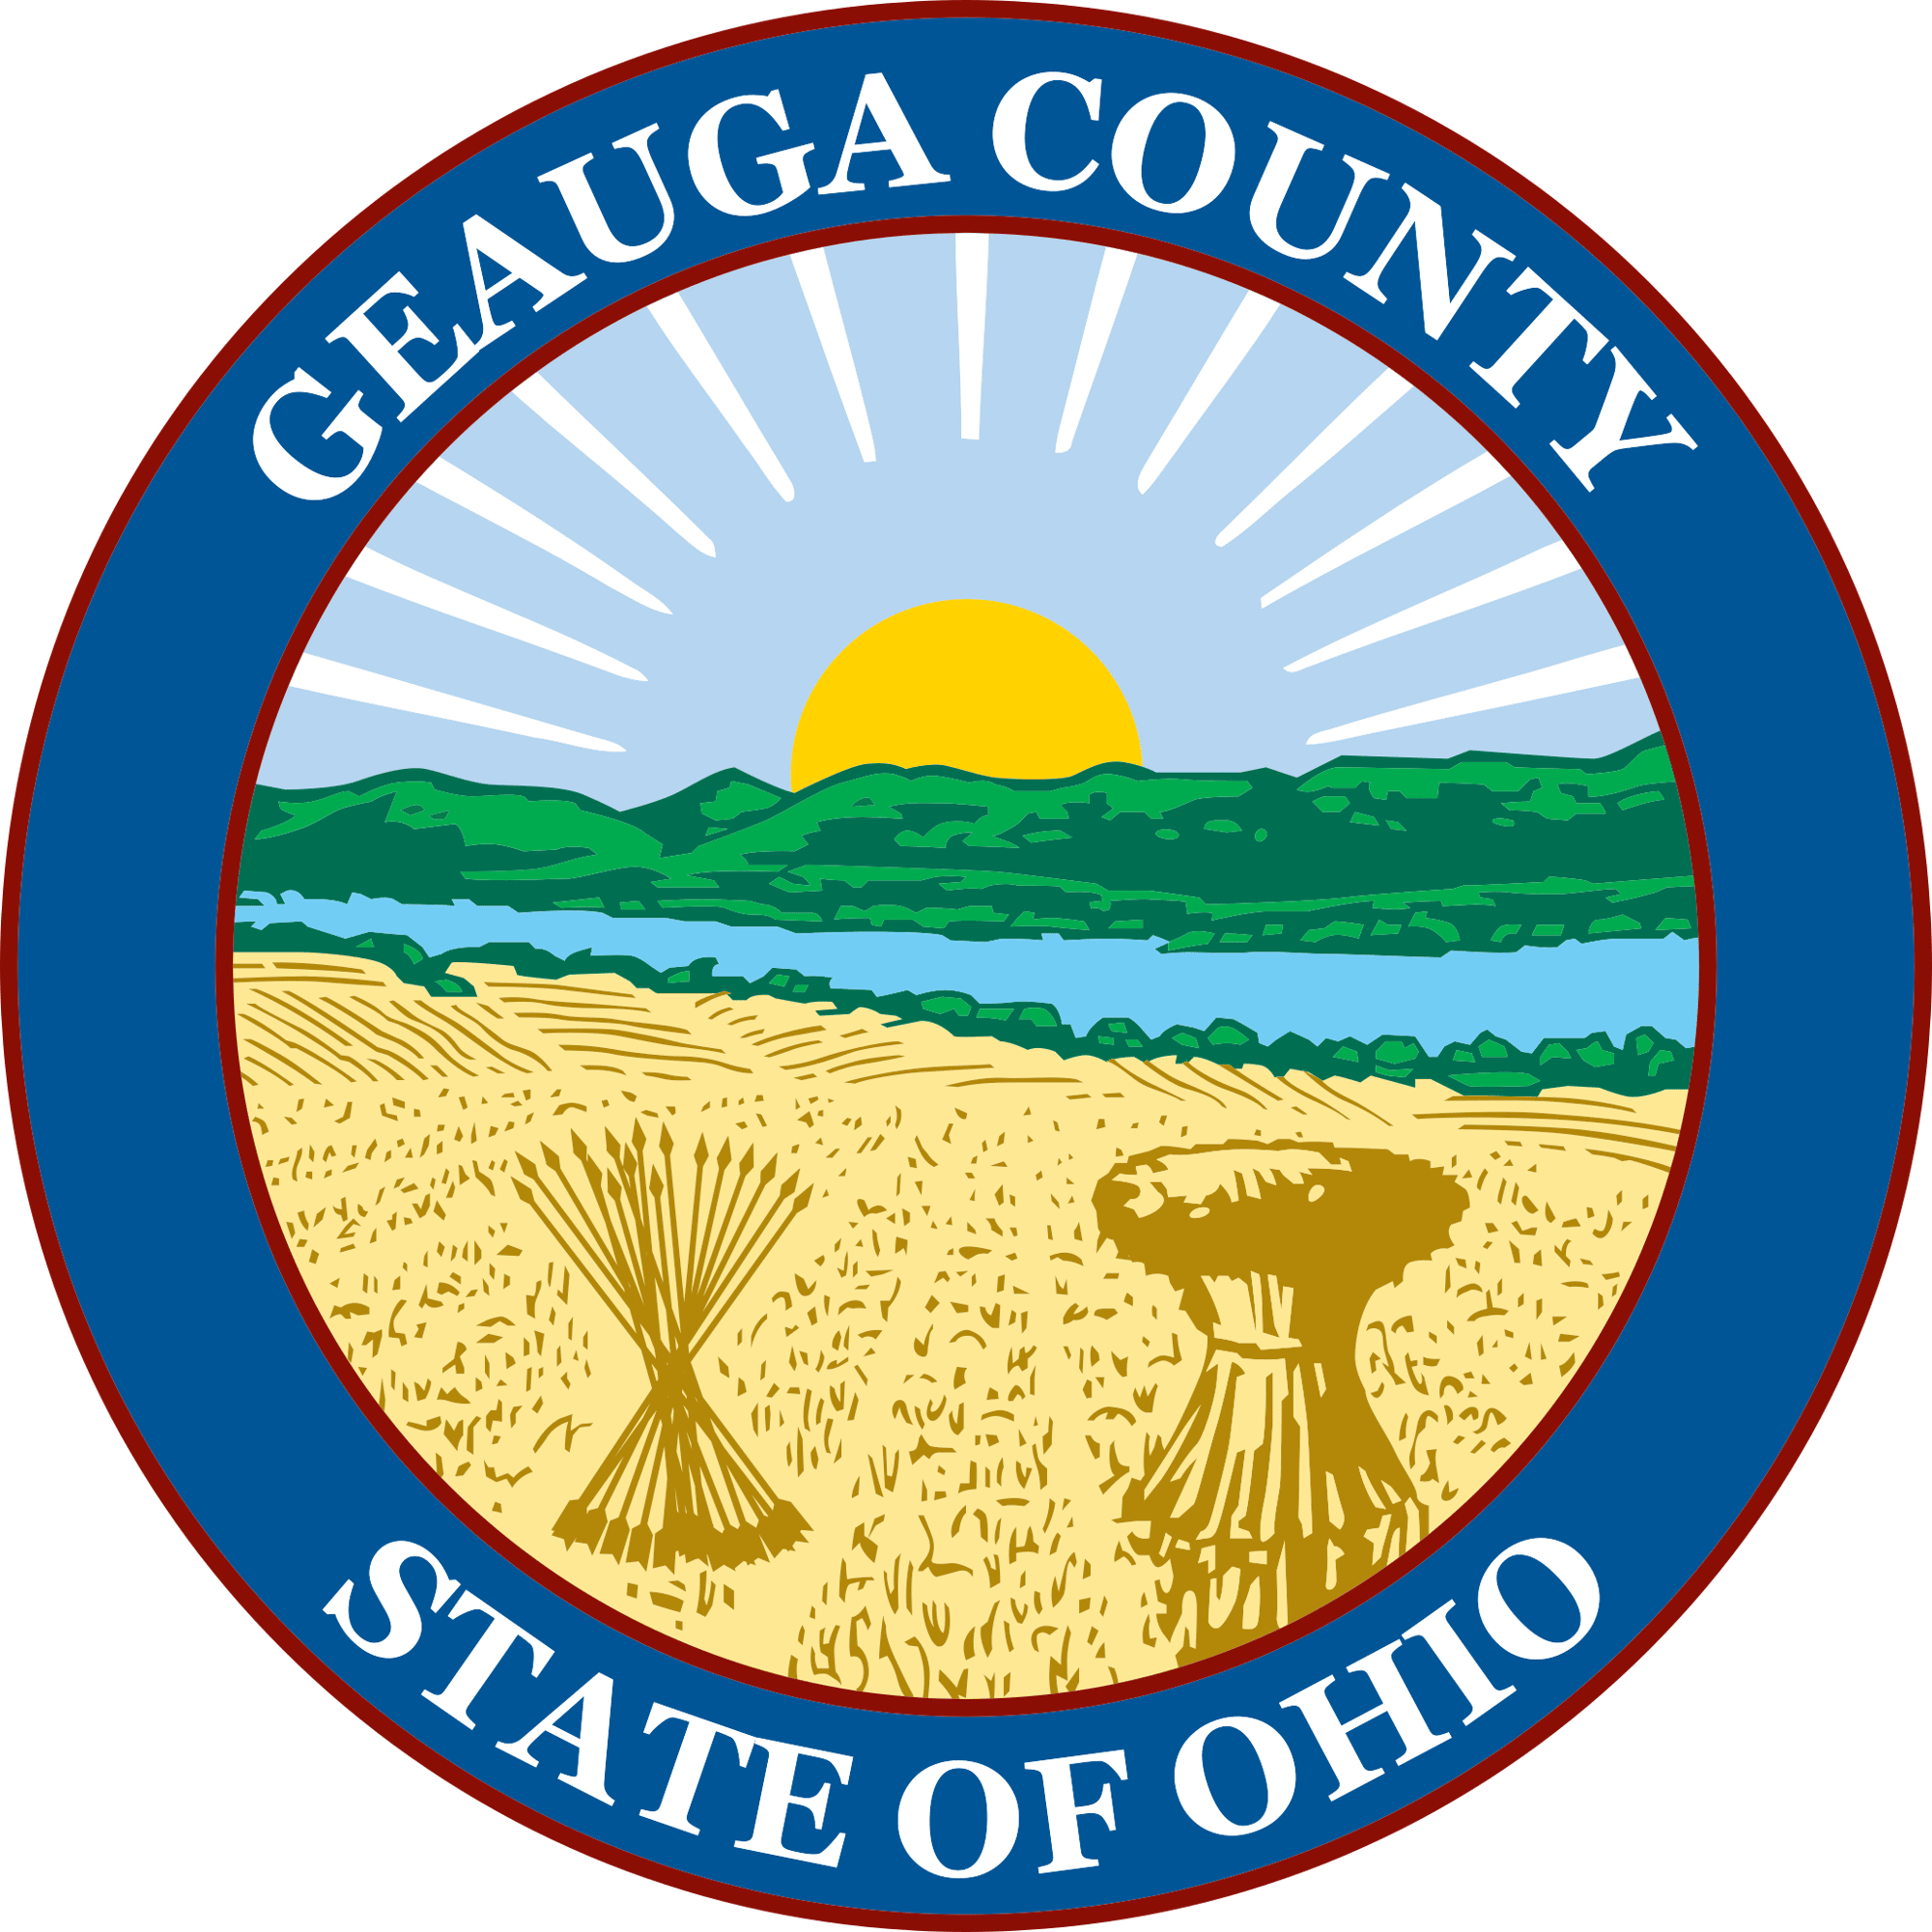 Geauga County Ohio Seal